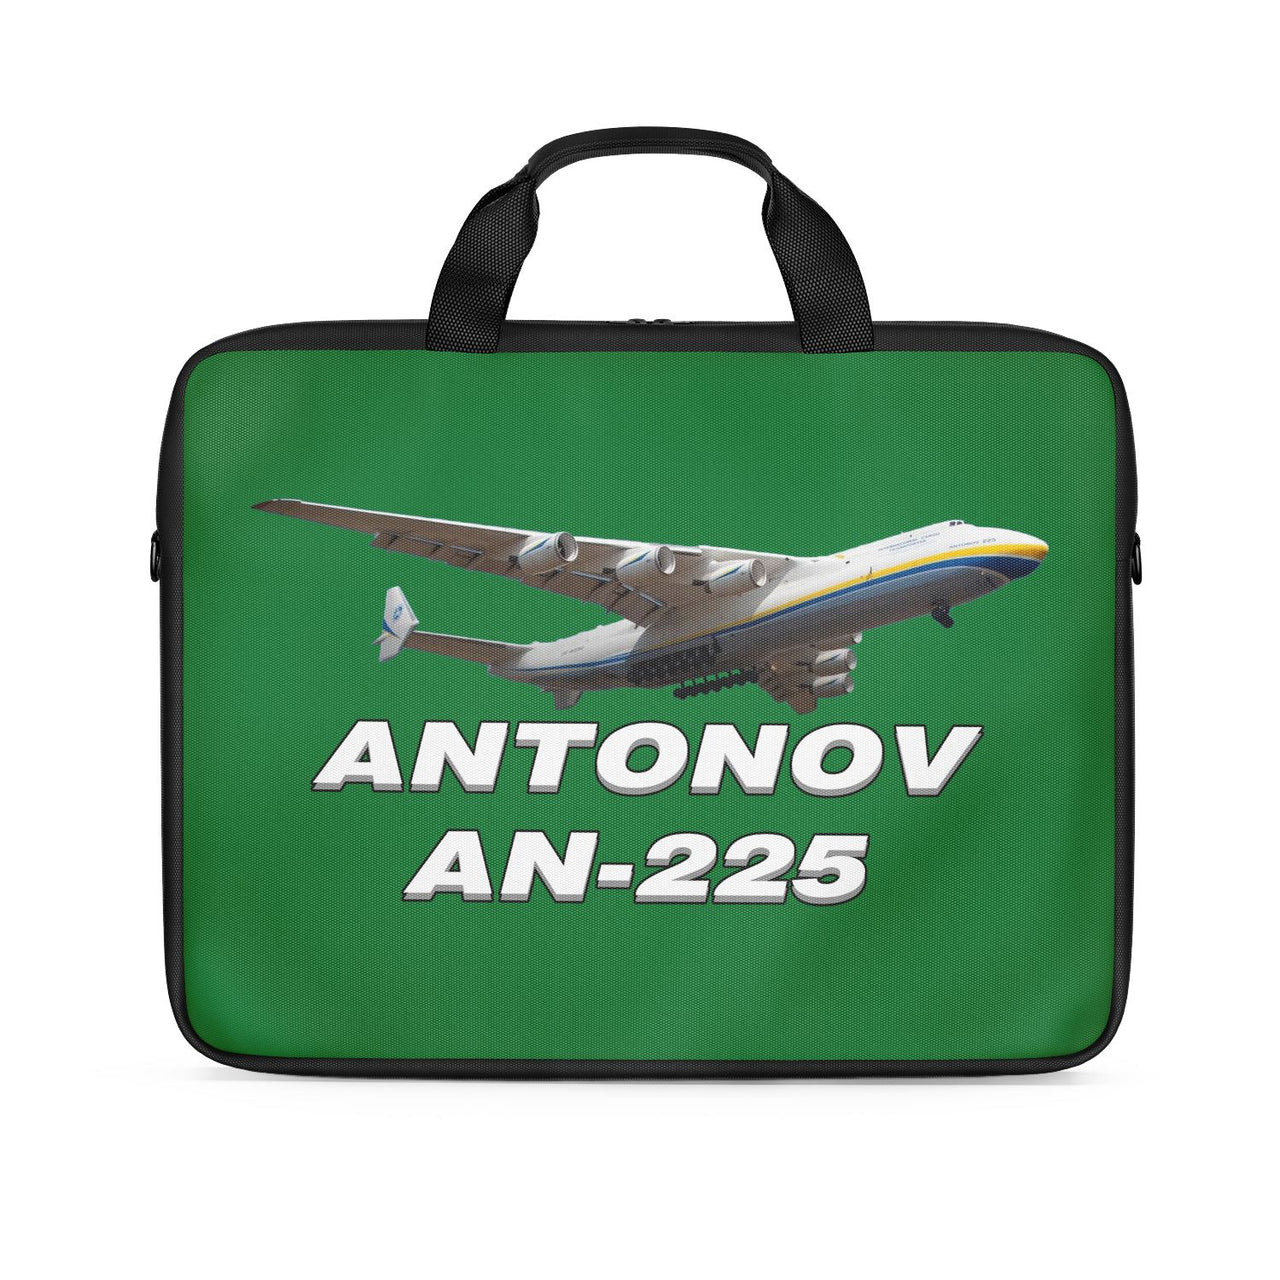 Antonov AN-225 (15) Designed Laptop & Tablet Bags